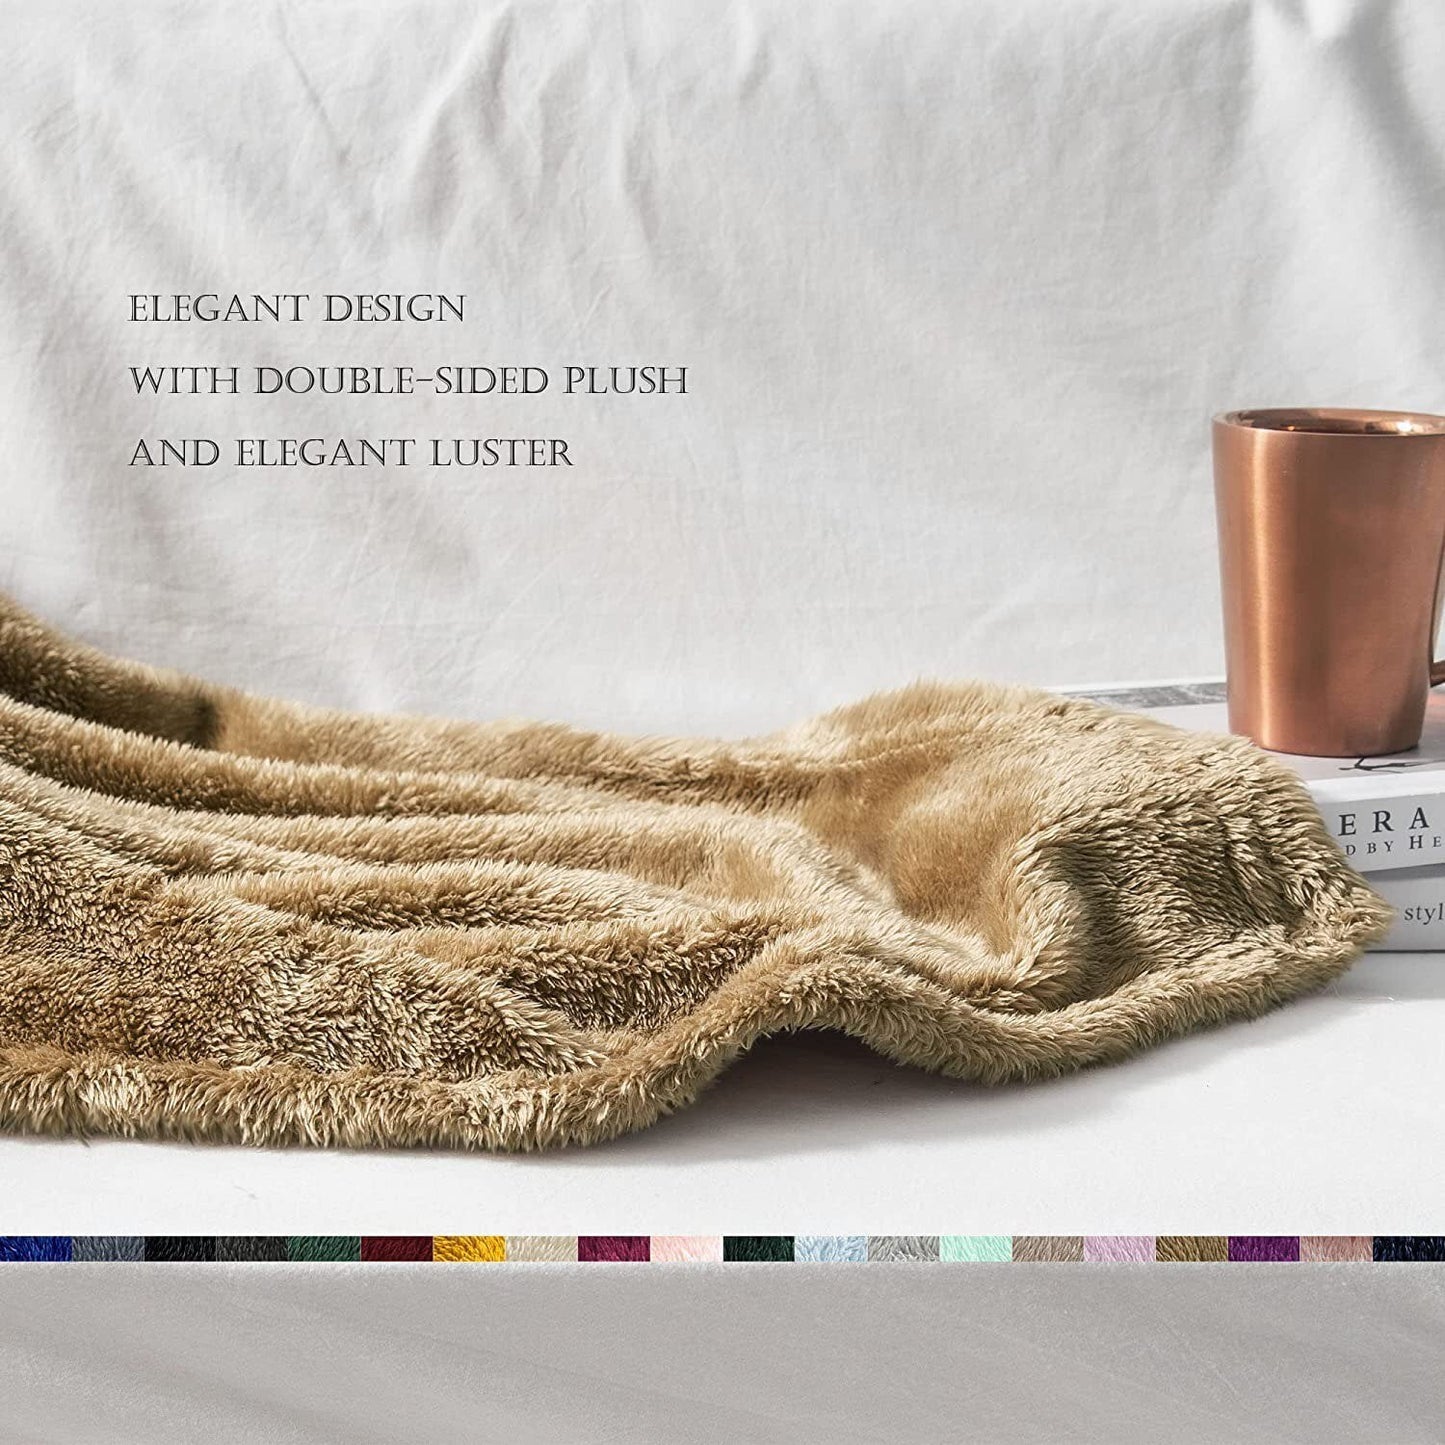 Exclusivo Mezcla Plush Fuzzy Large Fleece Throw Blanket ( 50" x 70", Brown)- Soft, Warm& Lightweight